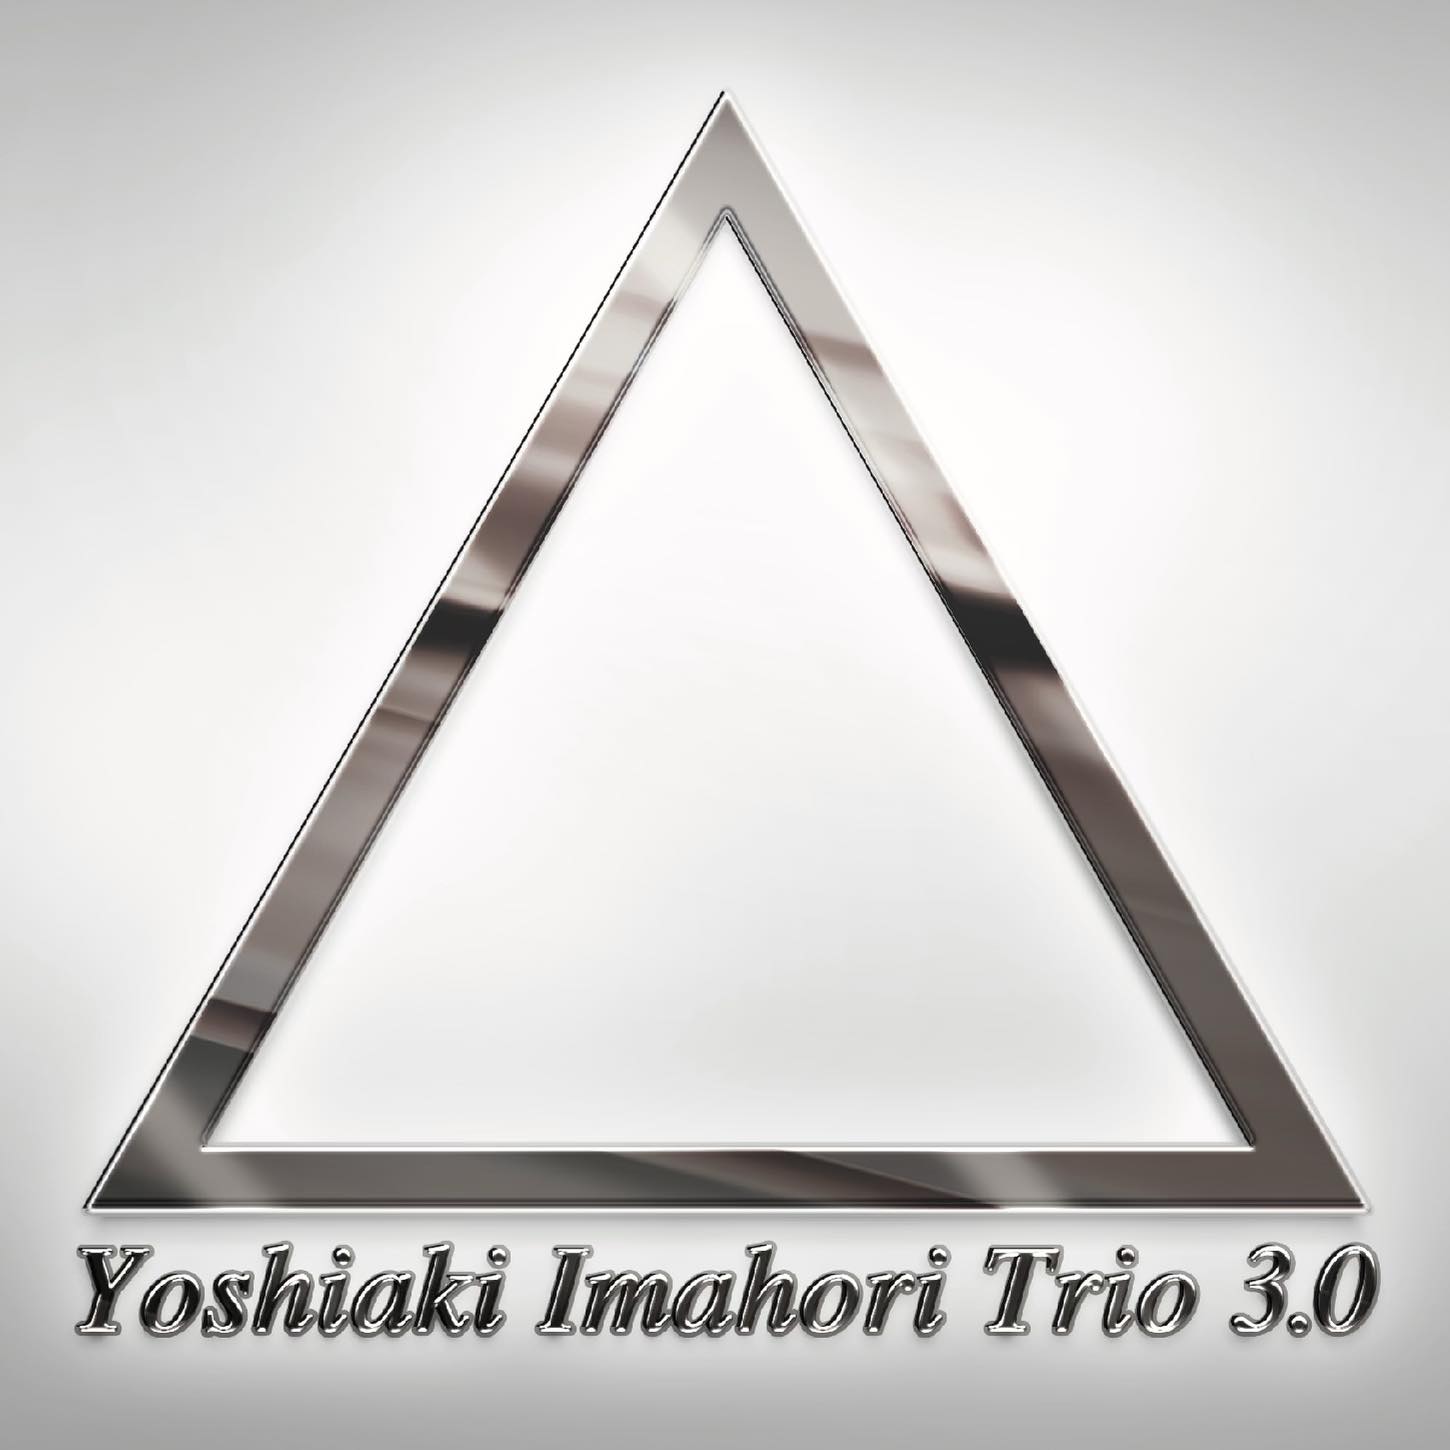 Yoshiaki Imahori Trio 3.0通販開始